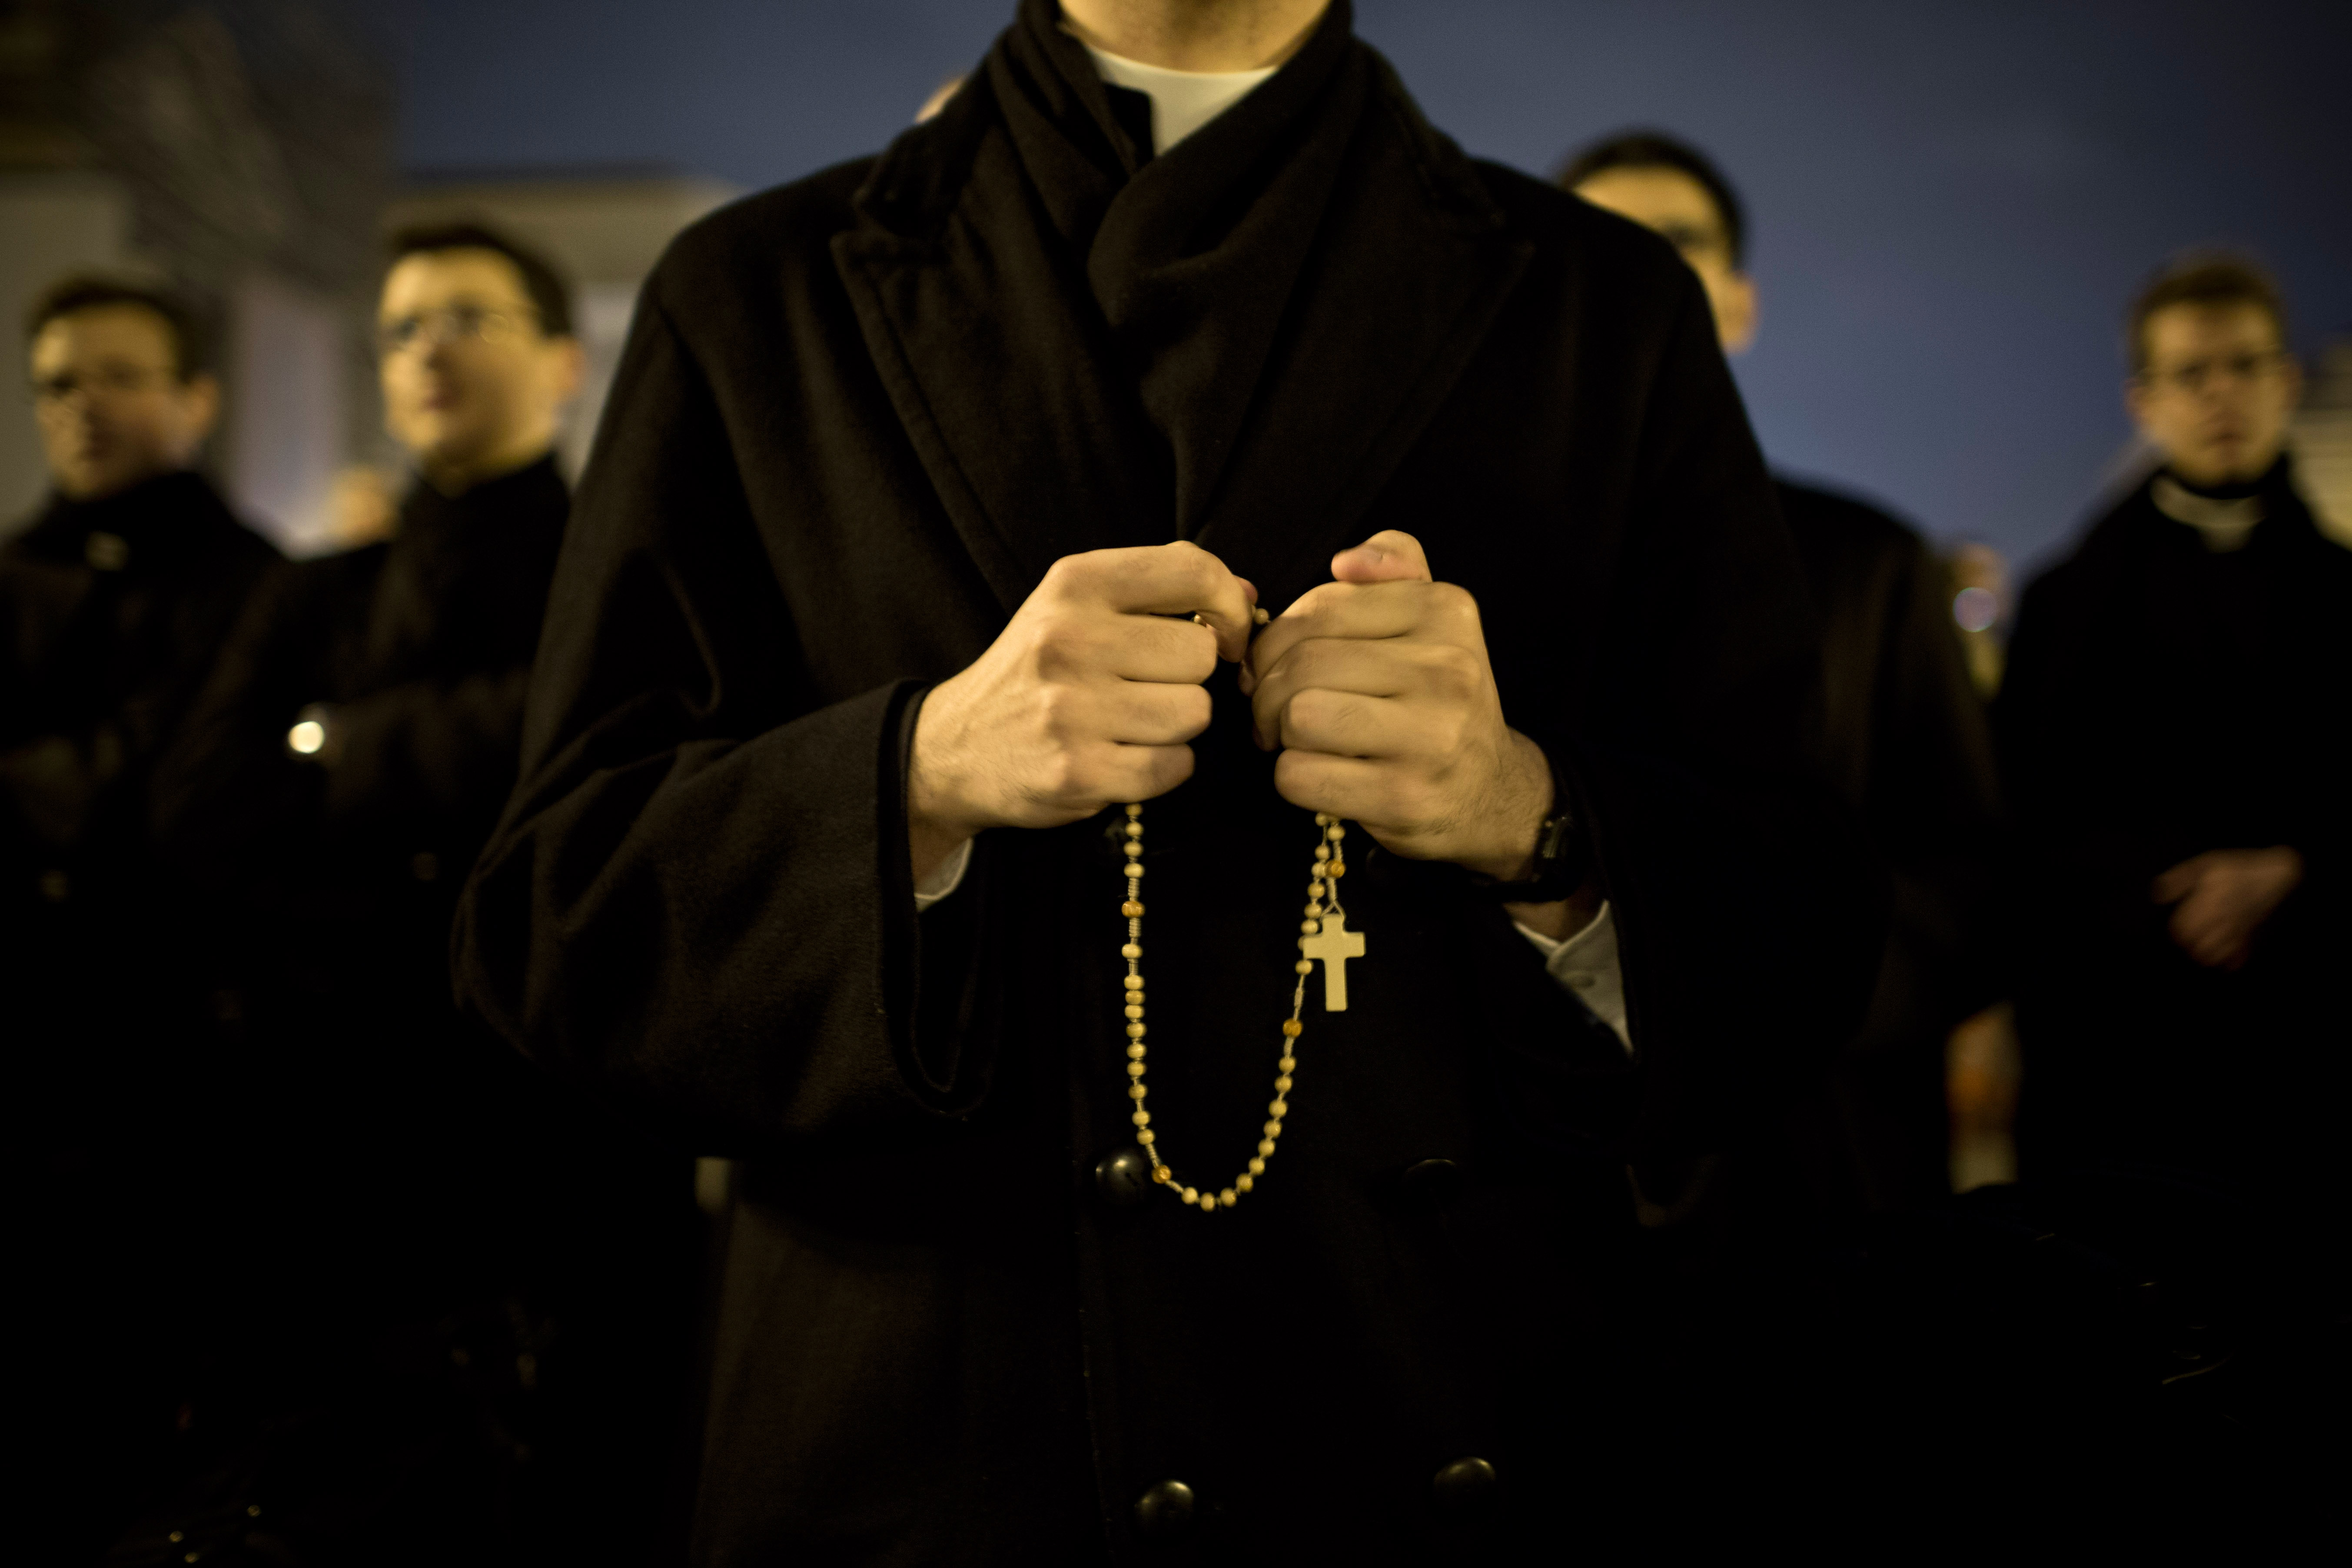 Pri est. Капеллан священник католический. Капеллан священник католический арт. Пастер католический священник. Католики священники Кристиан Бейл.